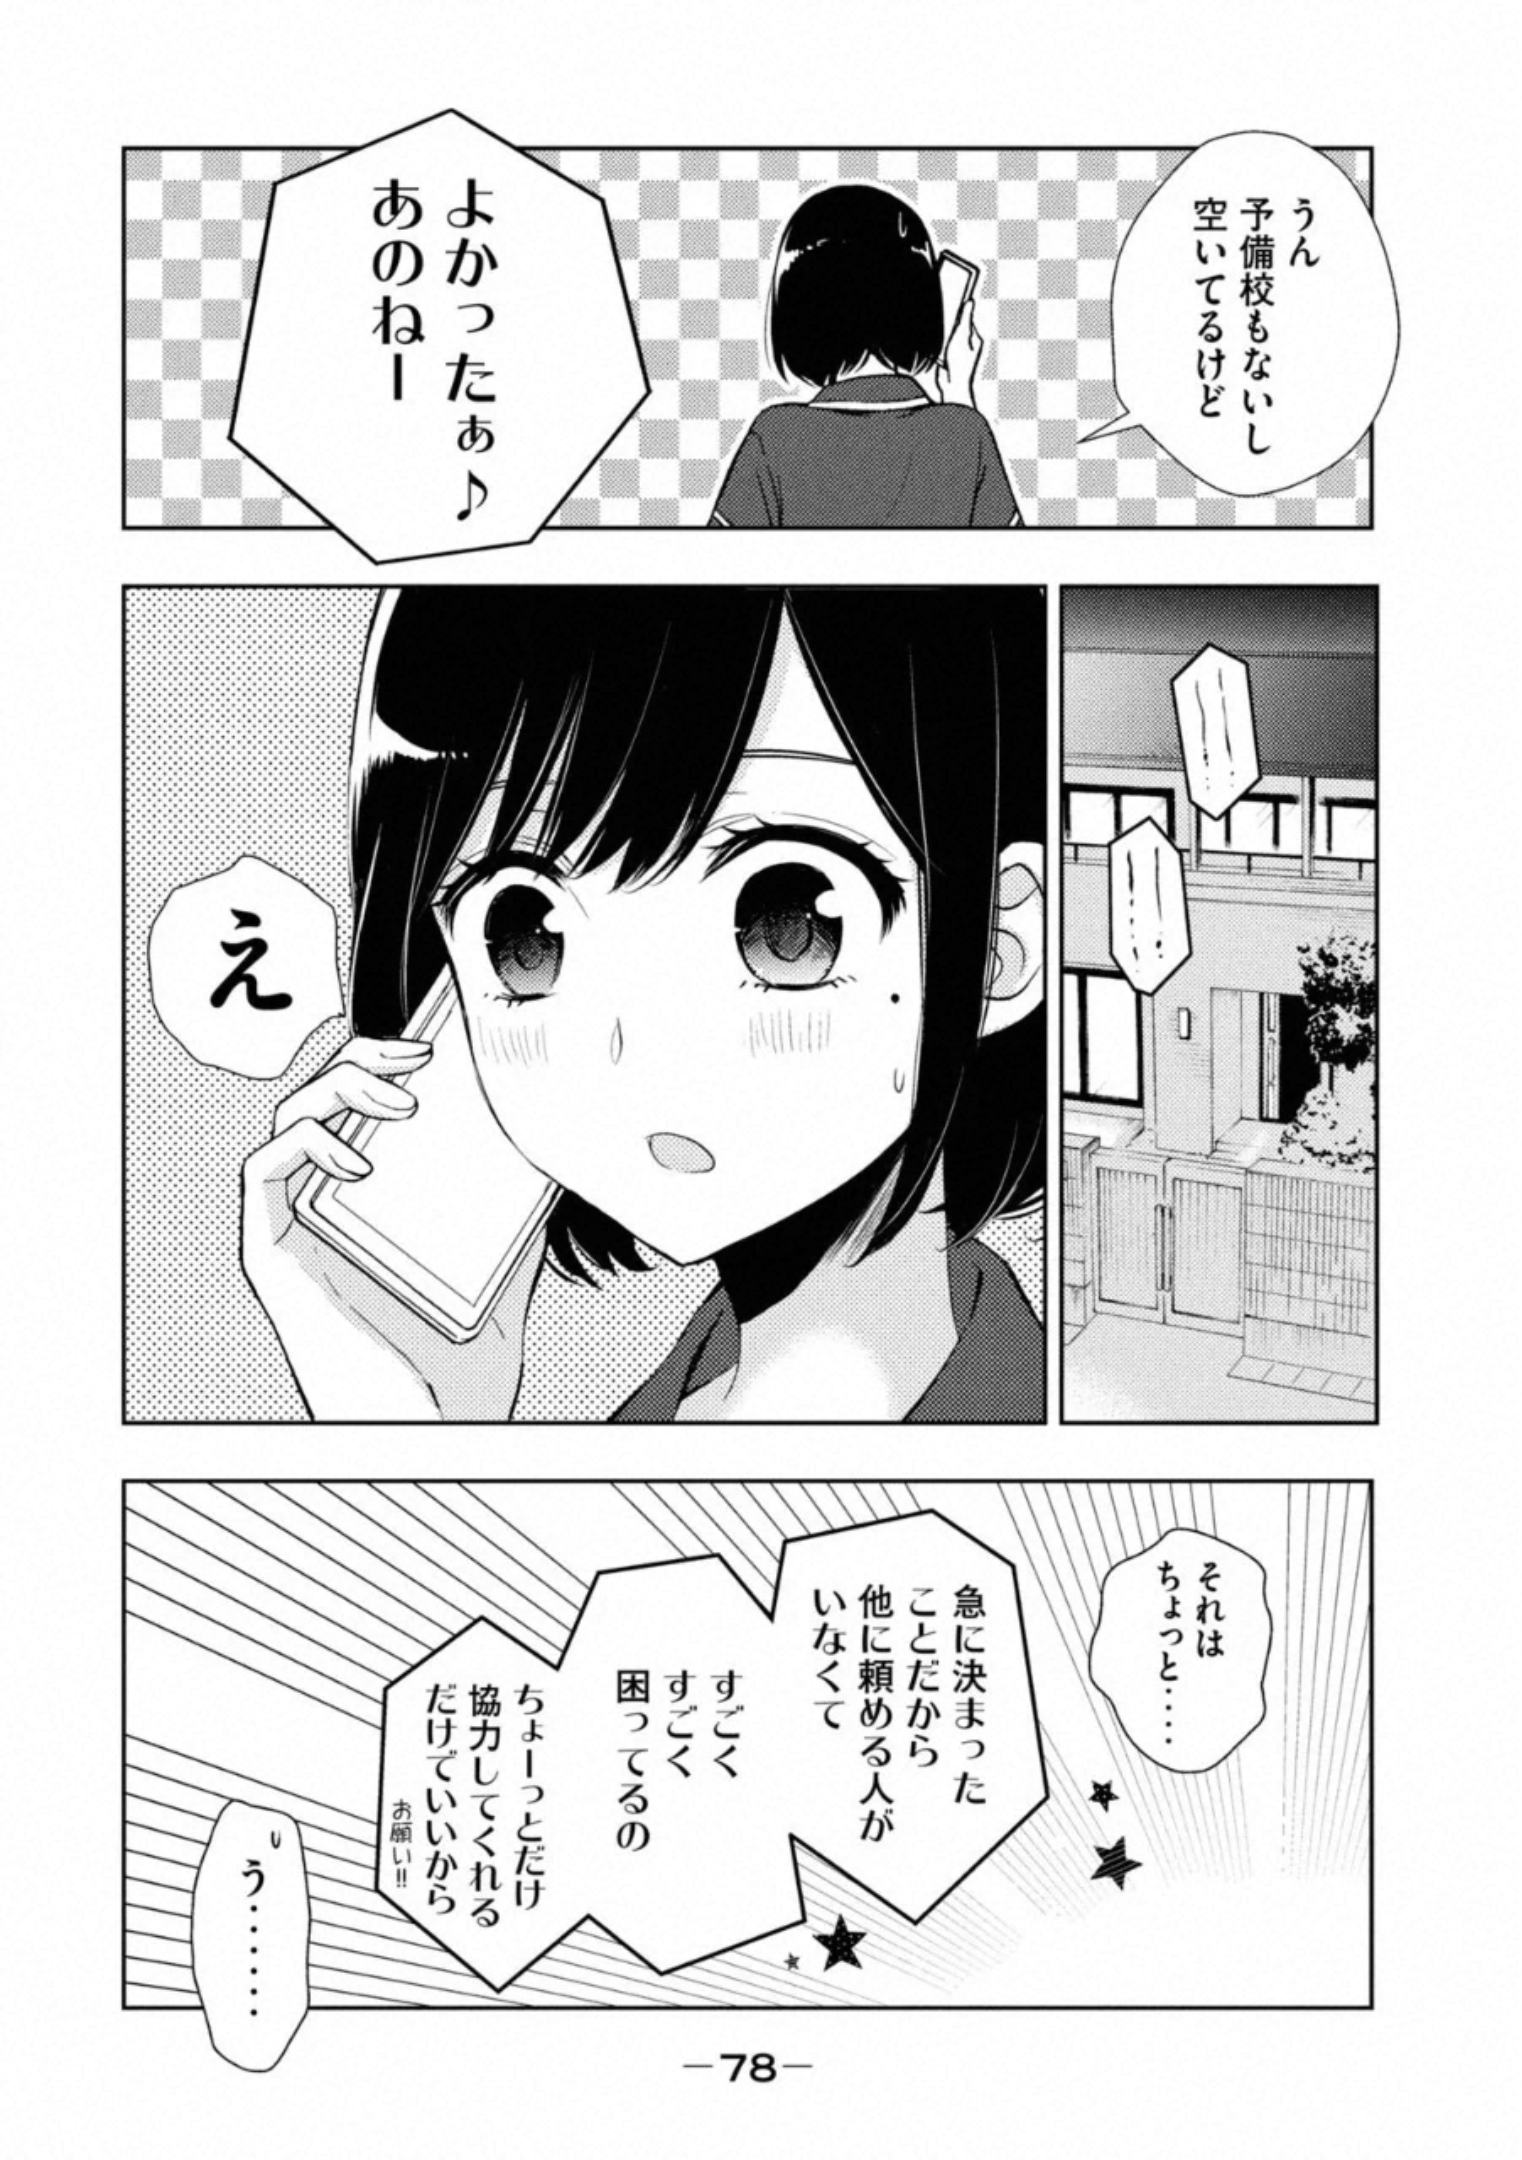 Watari-kun no xx ga Houkai Sunzen - Chapter 55 - Page 4